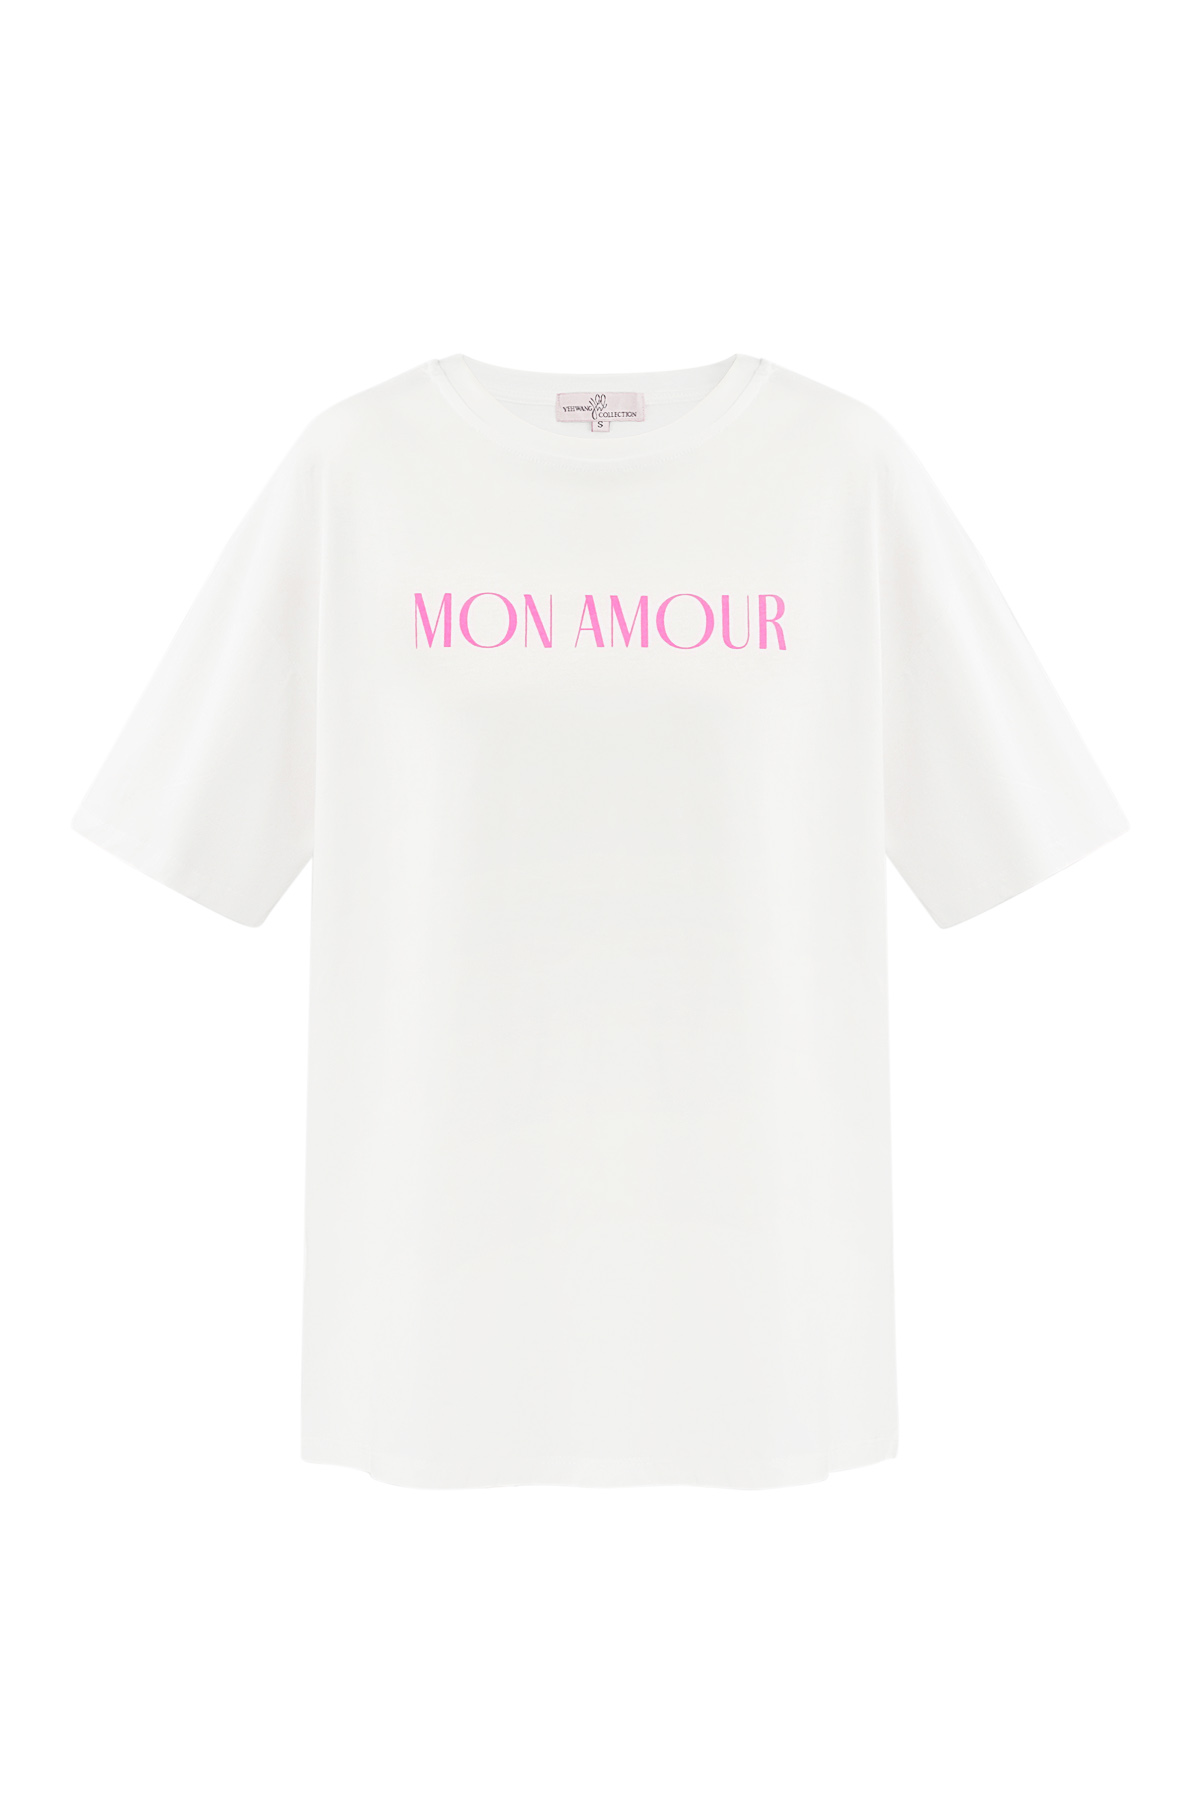 T-shirt mon amour - blanc h5 